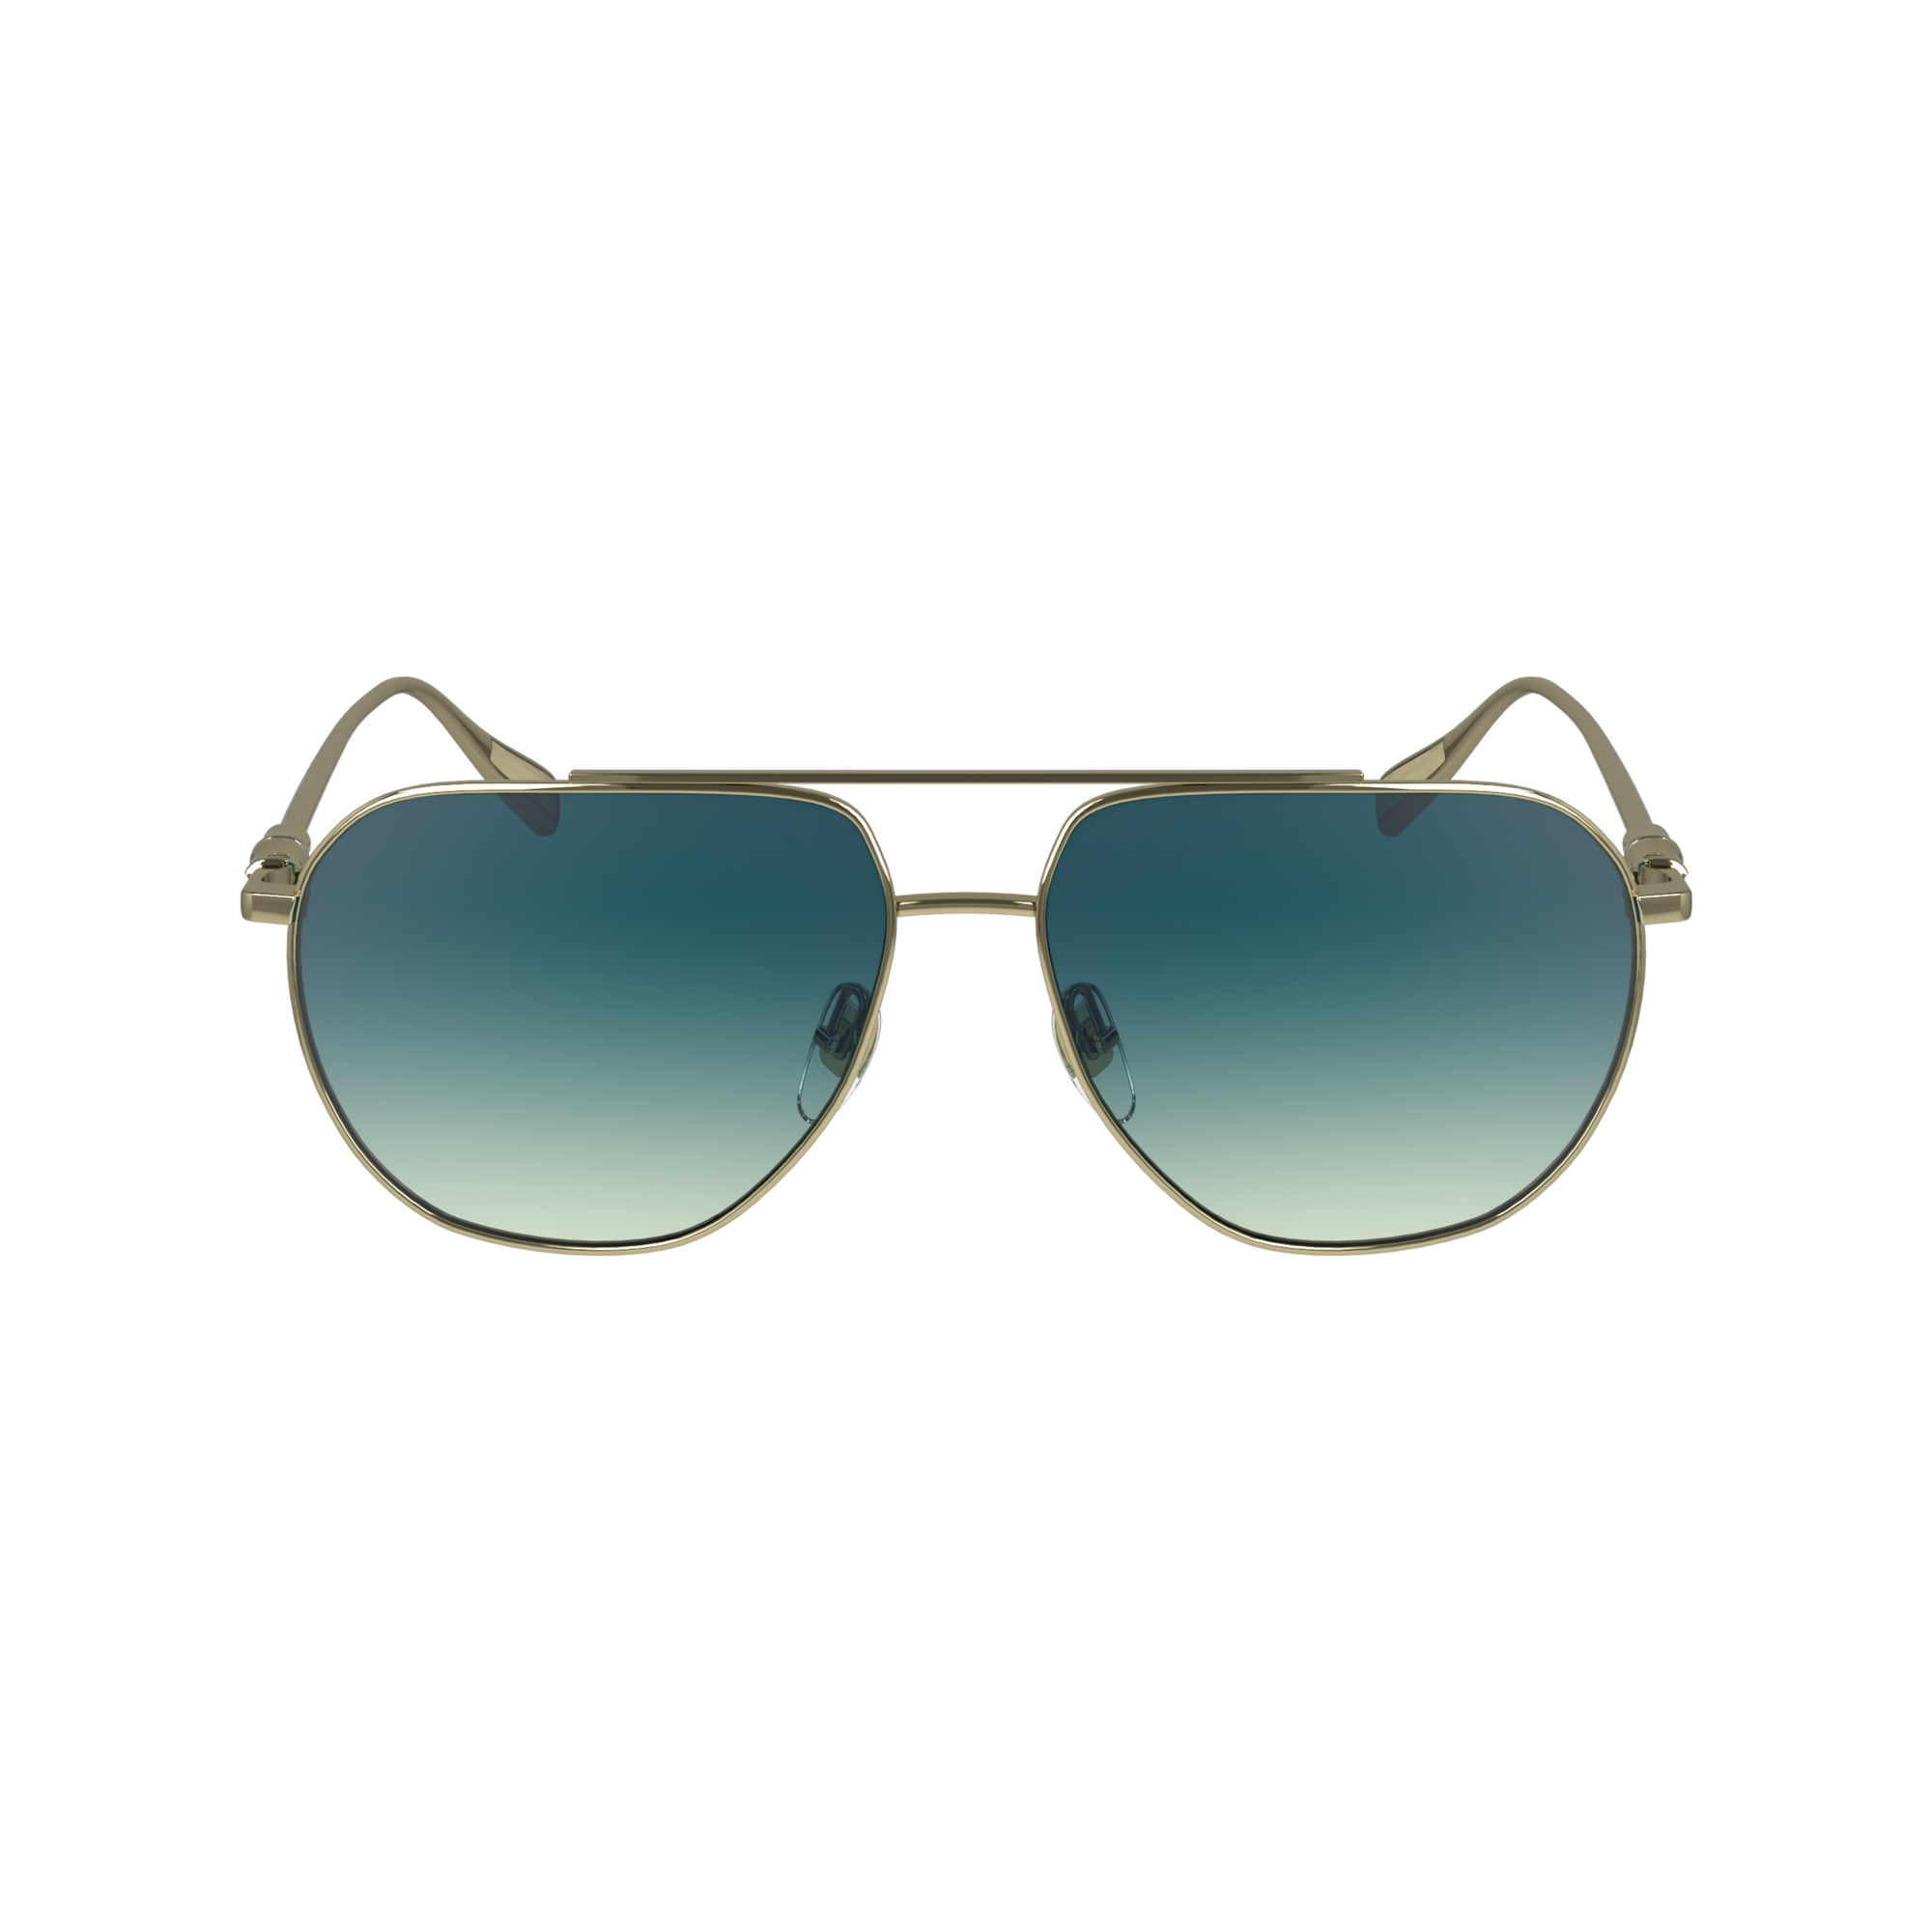 null Sunglasses, Gold/Petrol Blue